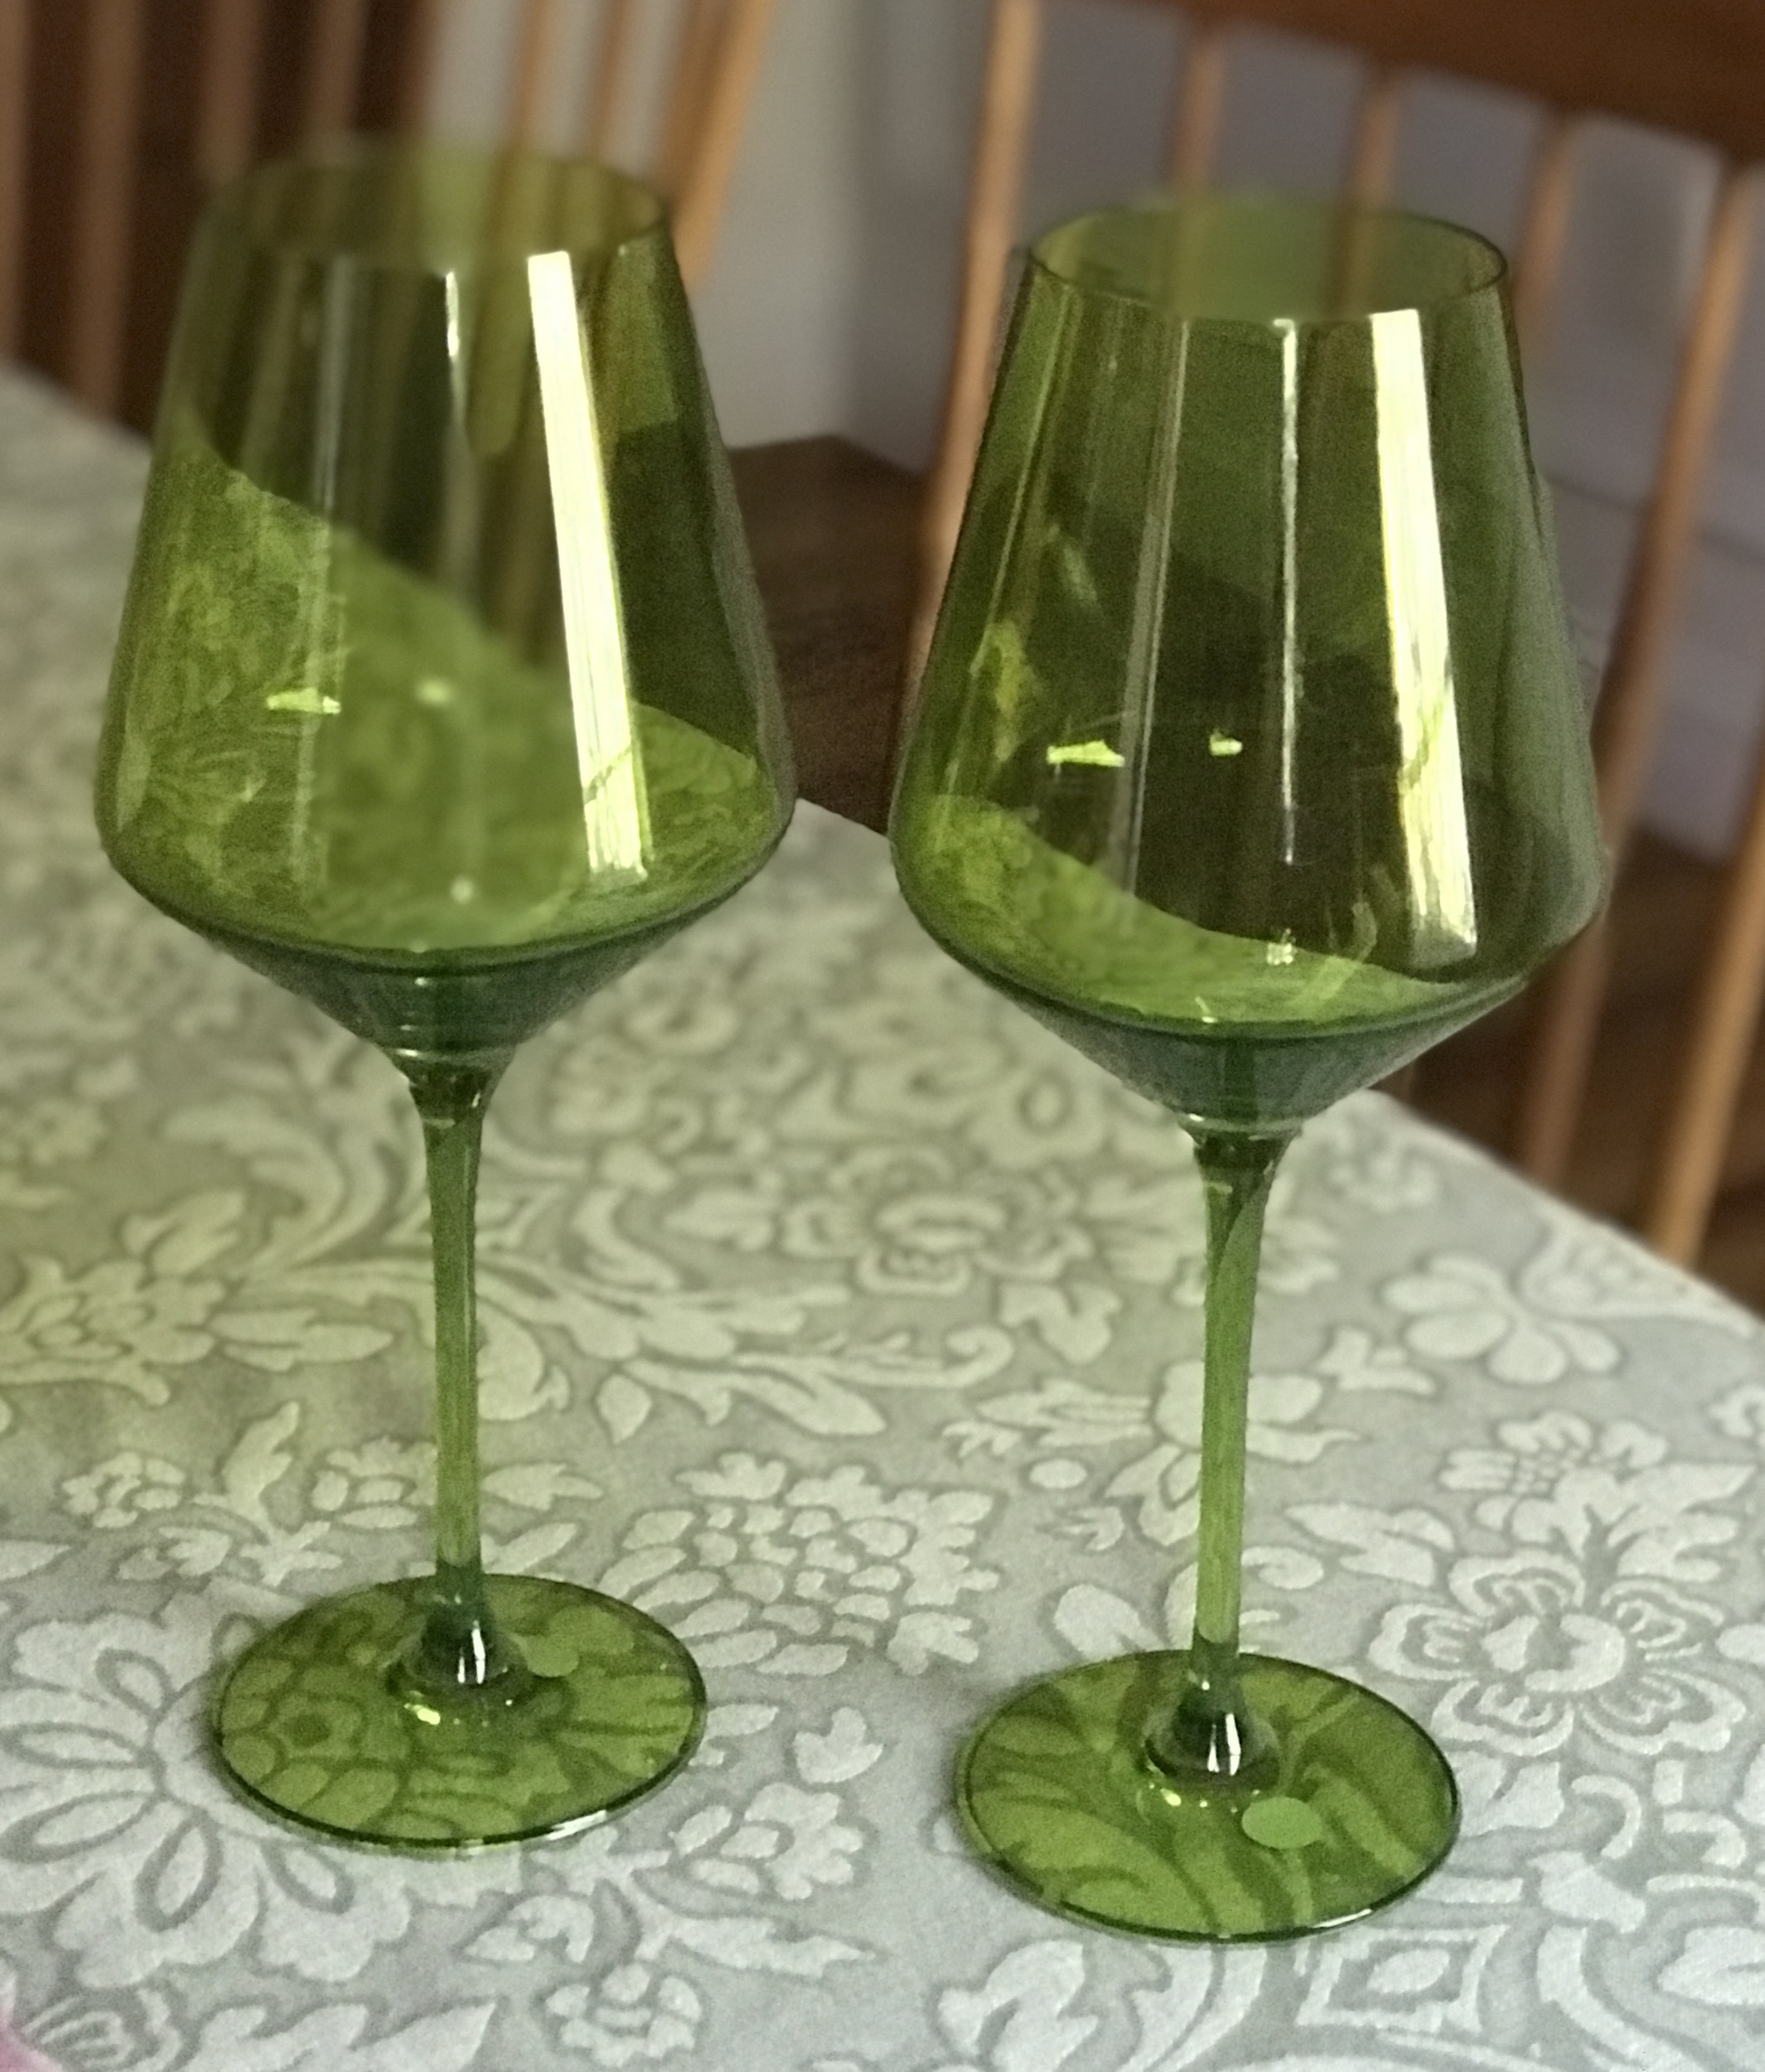 Estelle Colored Wine Stemless Glasses - Set of 6 {Iridescent}